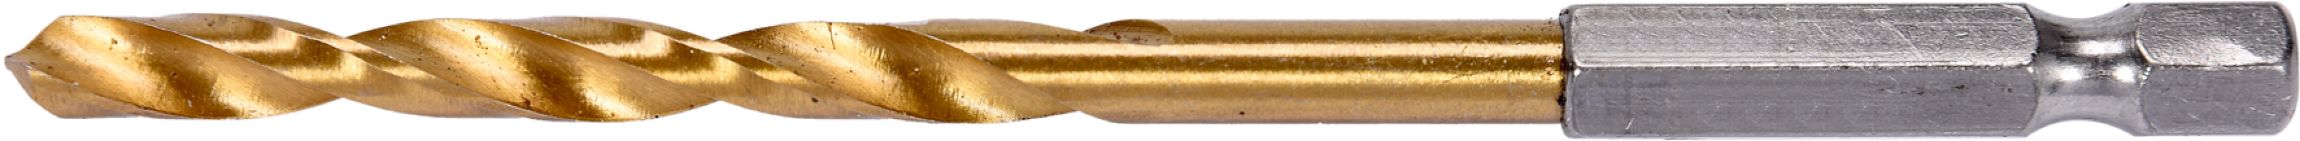 Vrtk do kovu HSS-titan 4,0mm se estihranou stopkou 1/4" Yato YT-44757